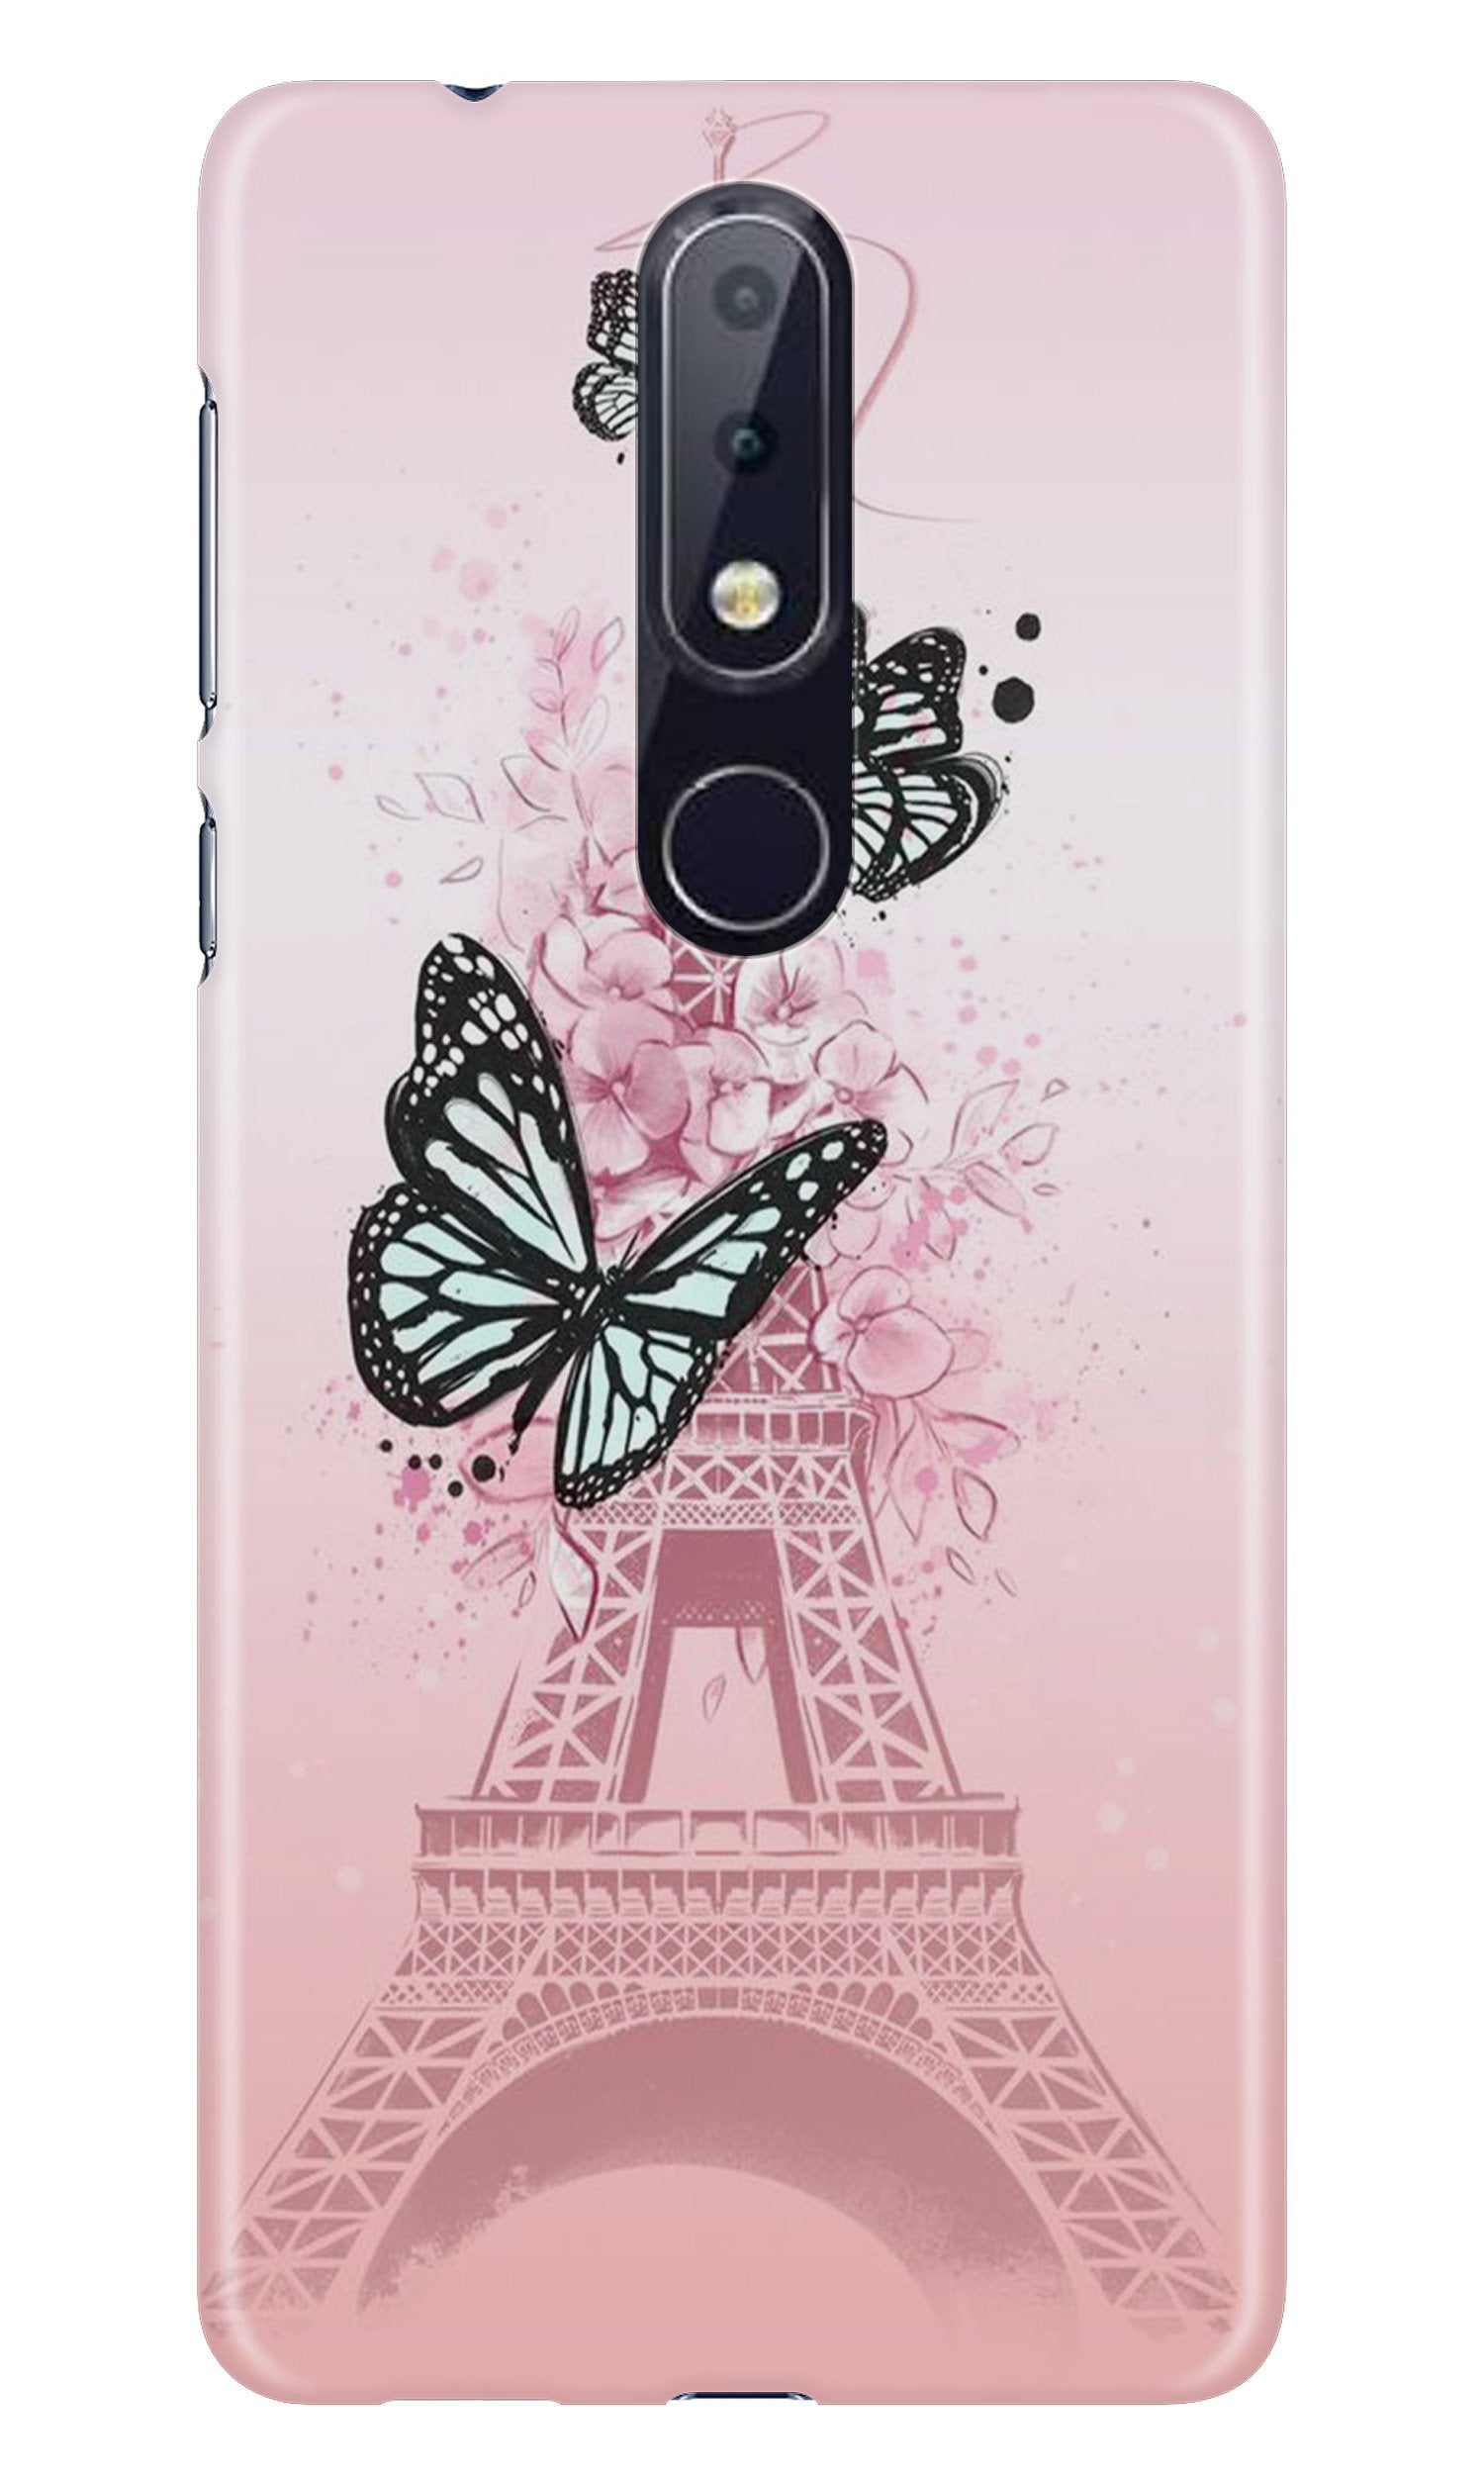 Eiffel Tower Case for Nokia 6.1 Plus (Design No. 211)